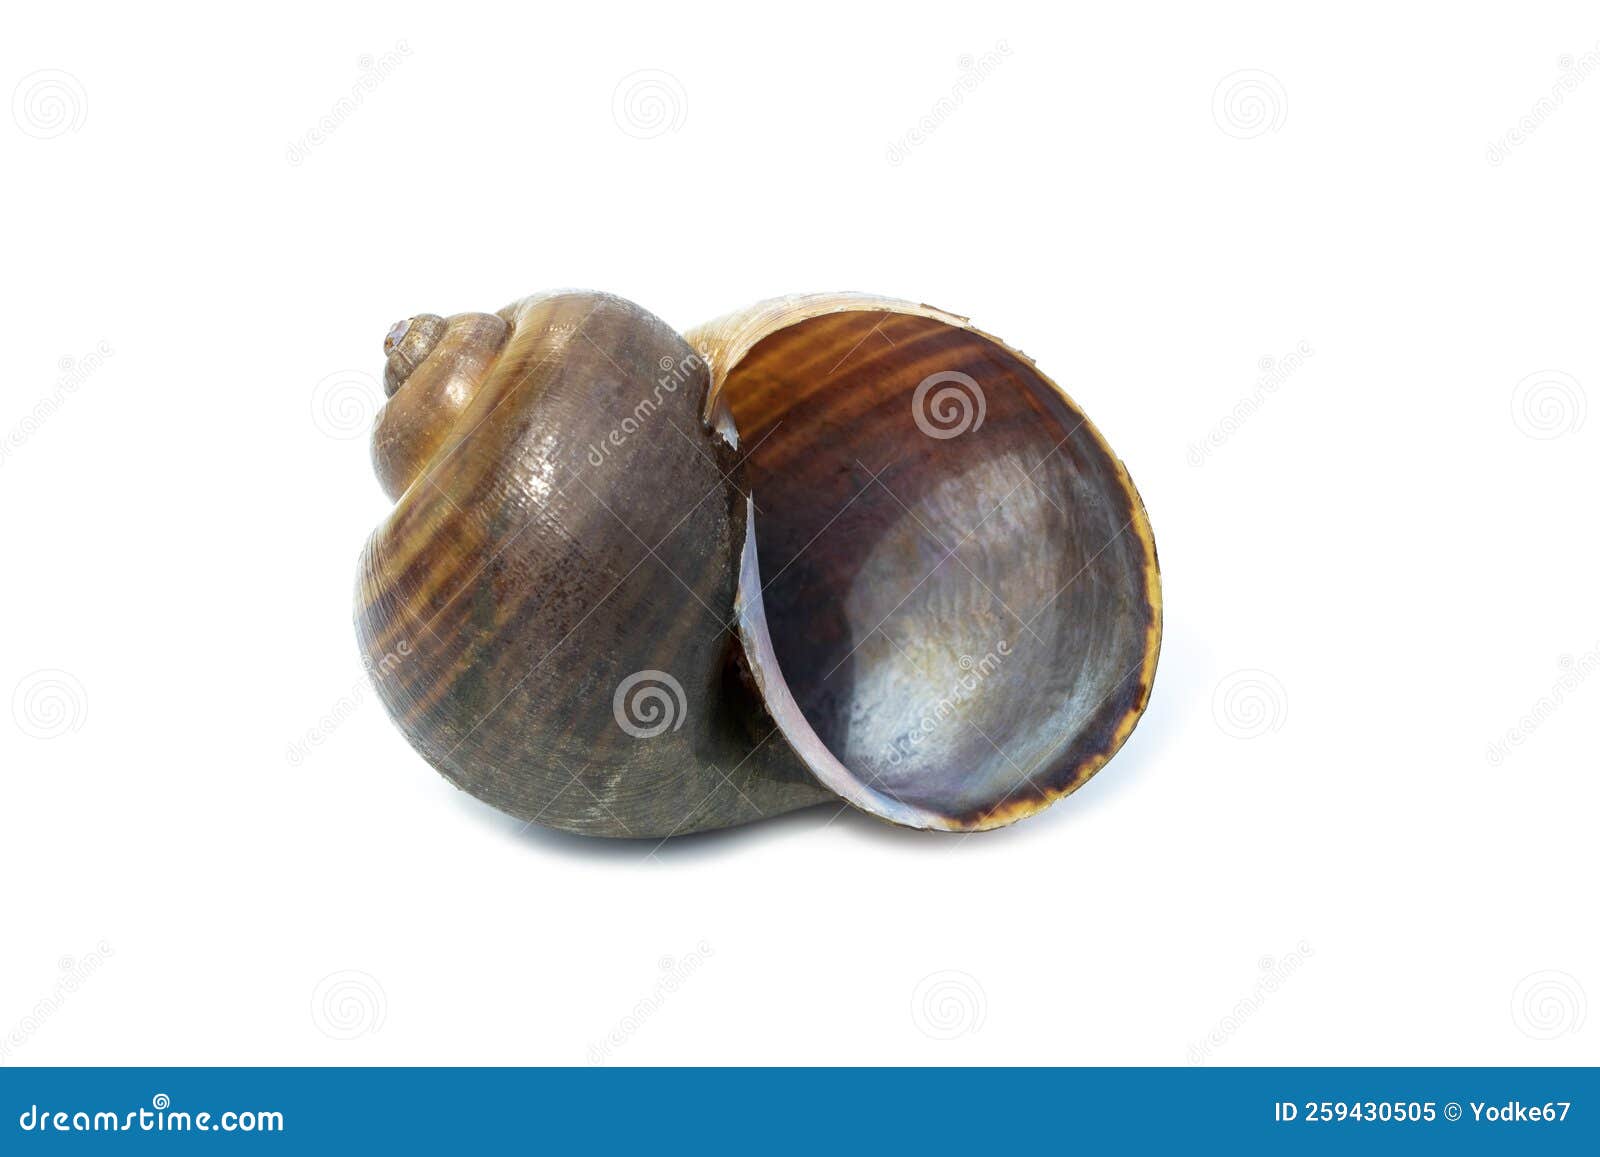 image of apple snail pila ampullacea  on white background. animal